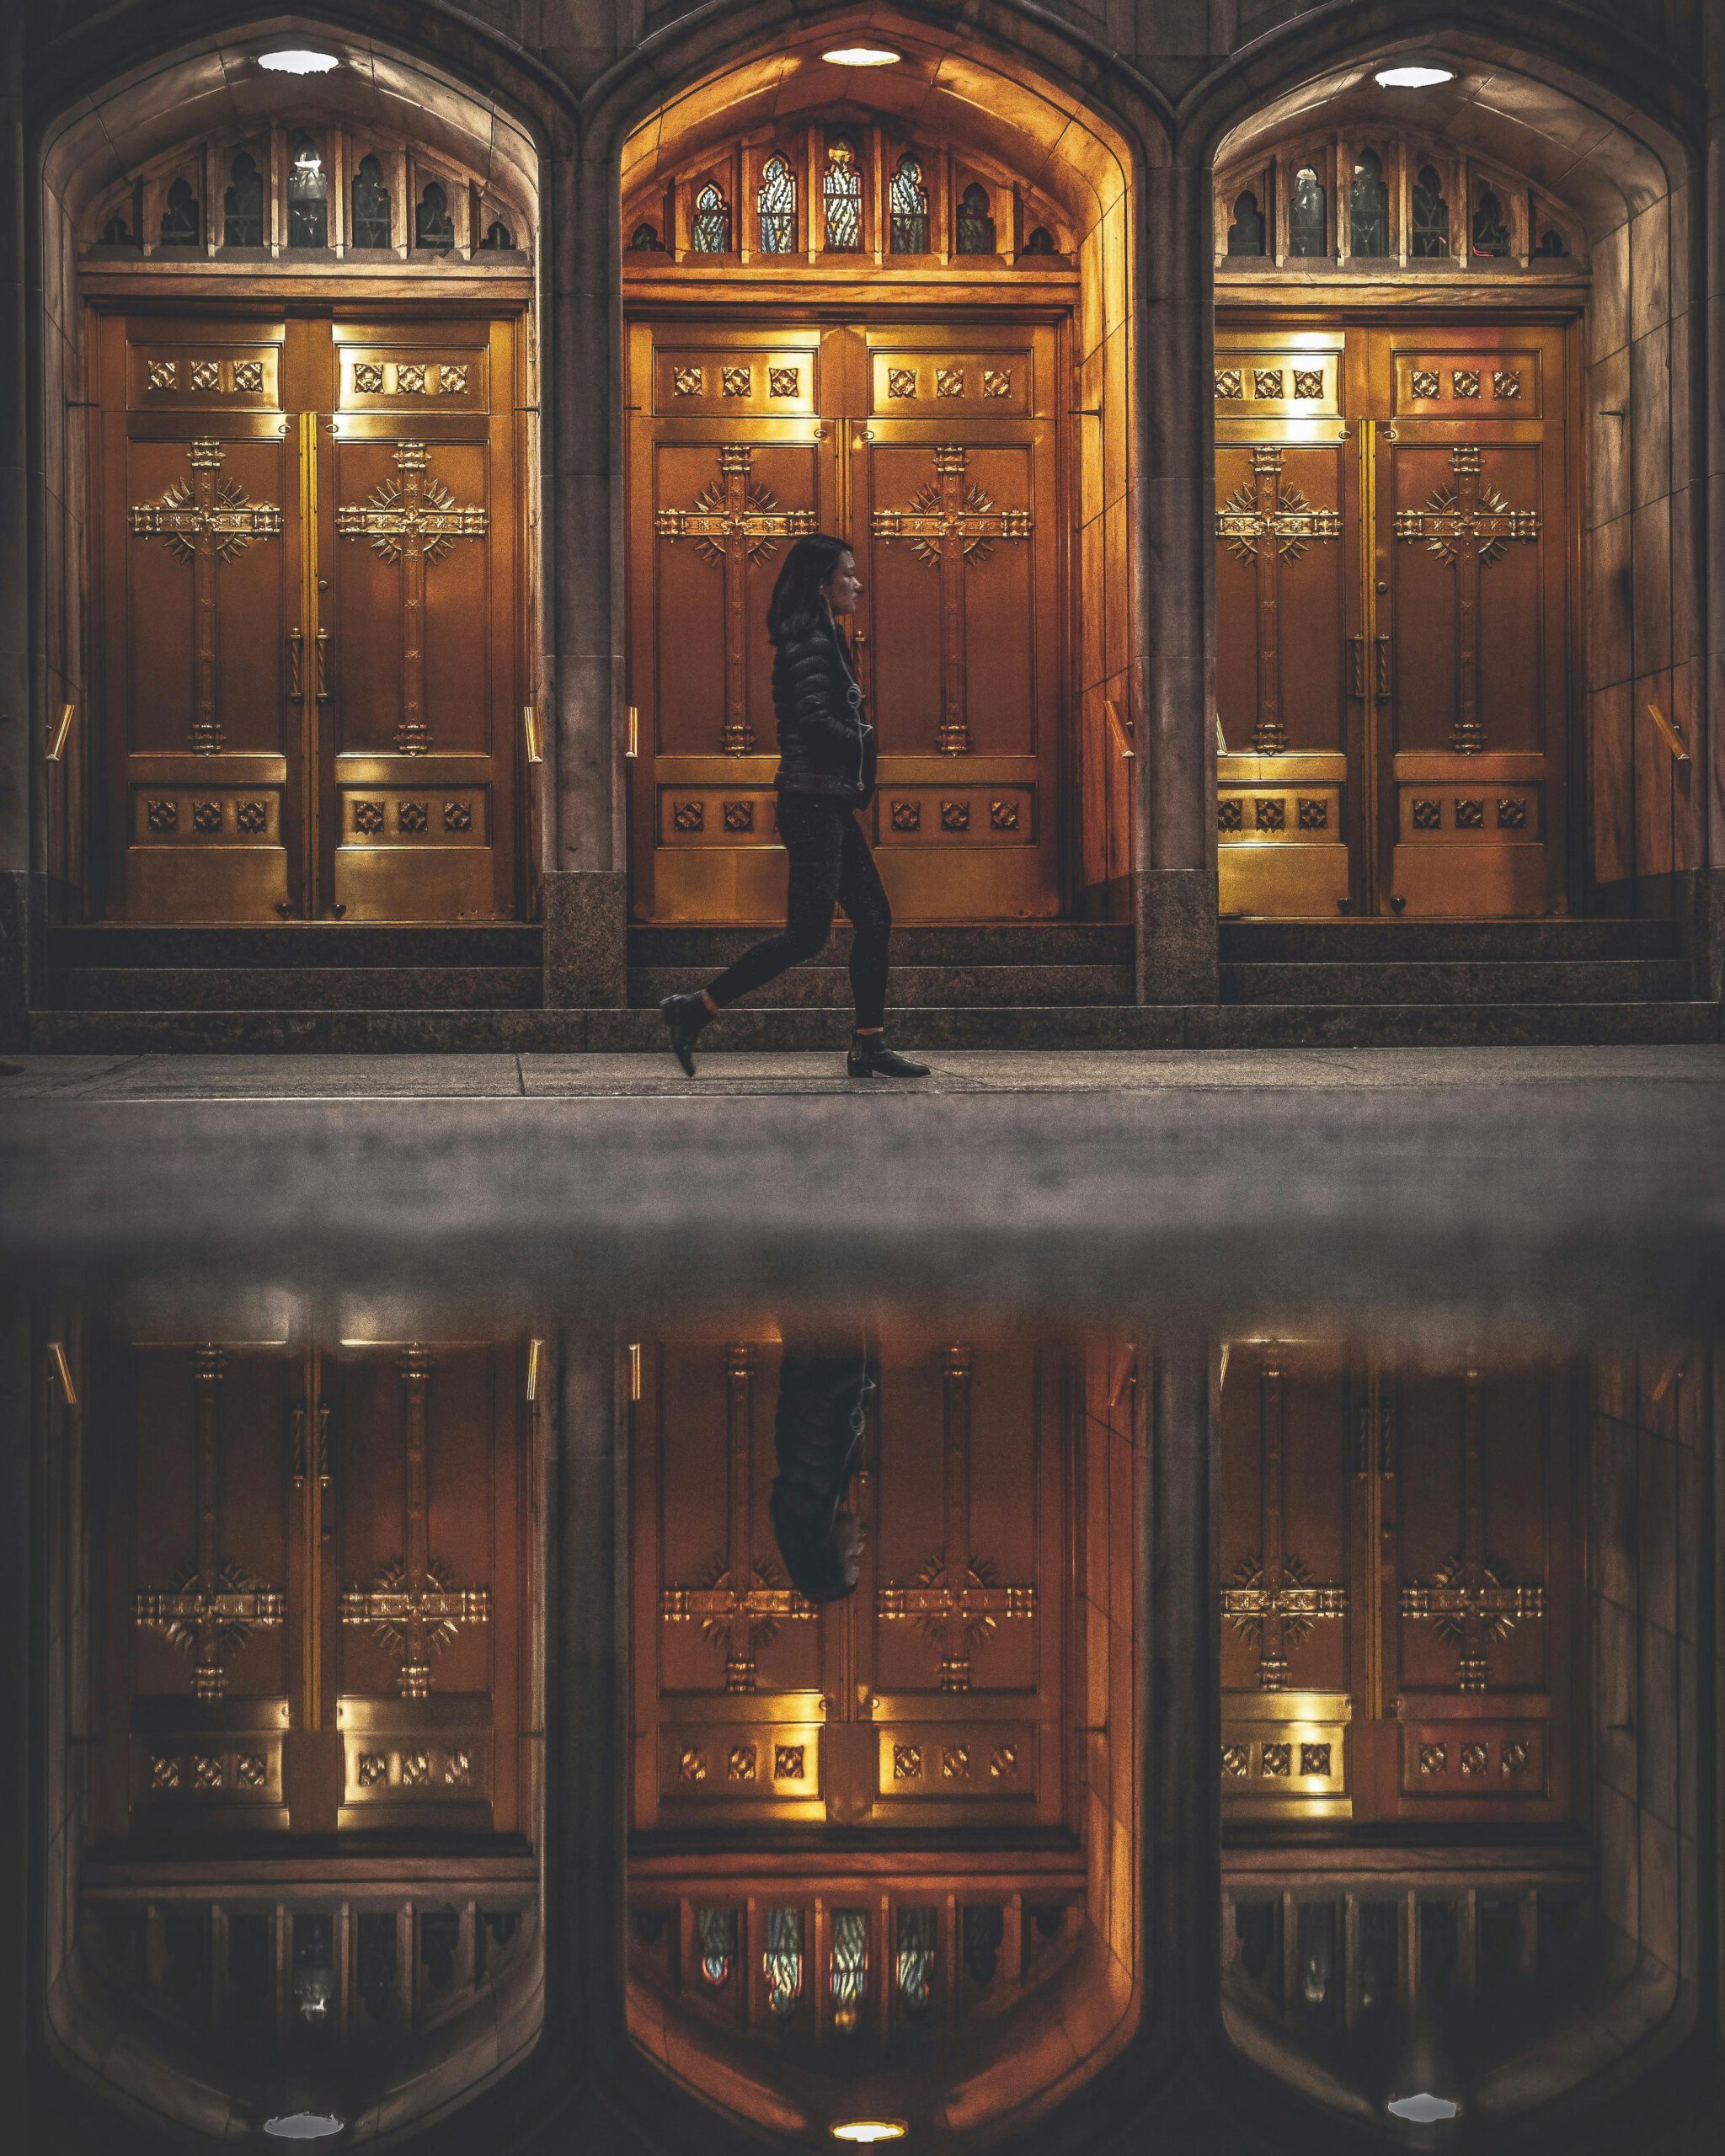 Pexels Stockphoto - Lange Nacht der Museen